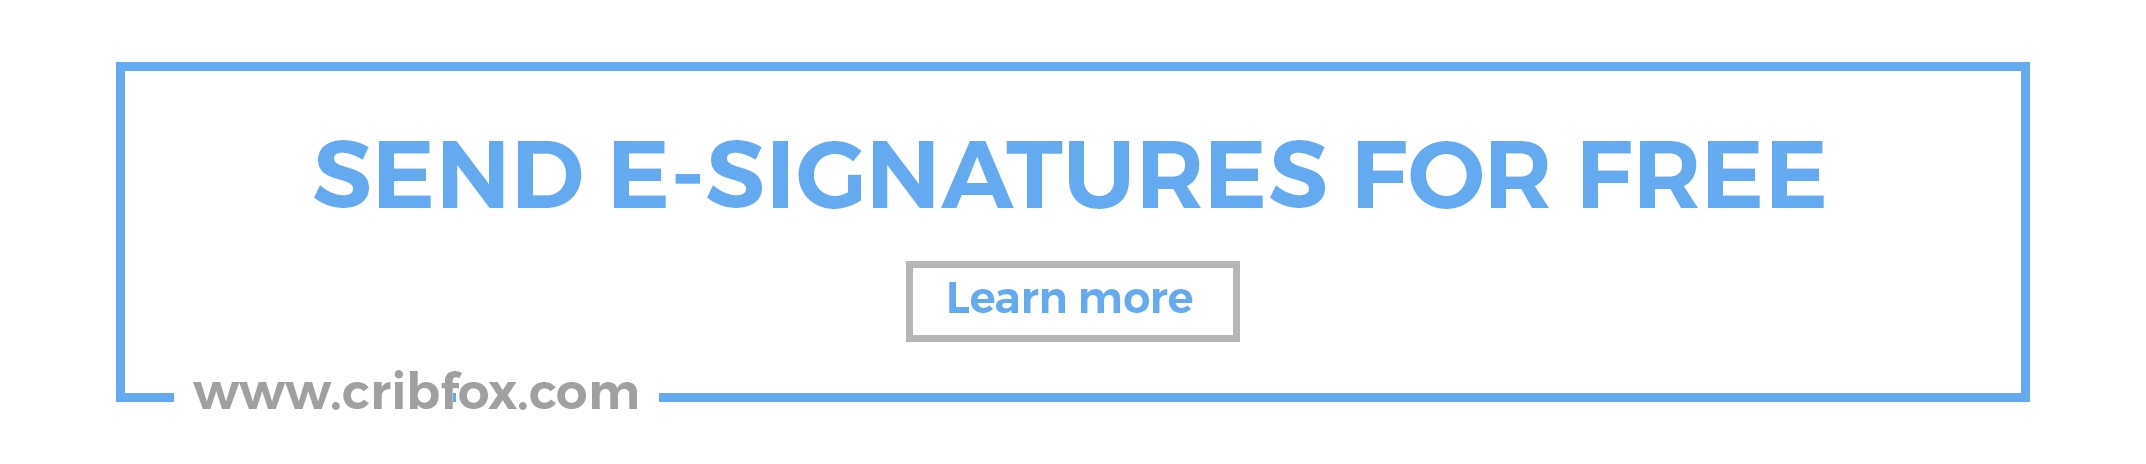 Send E-Signatures For Free. Cribfox Banner Ad, horizontal.